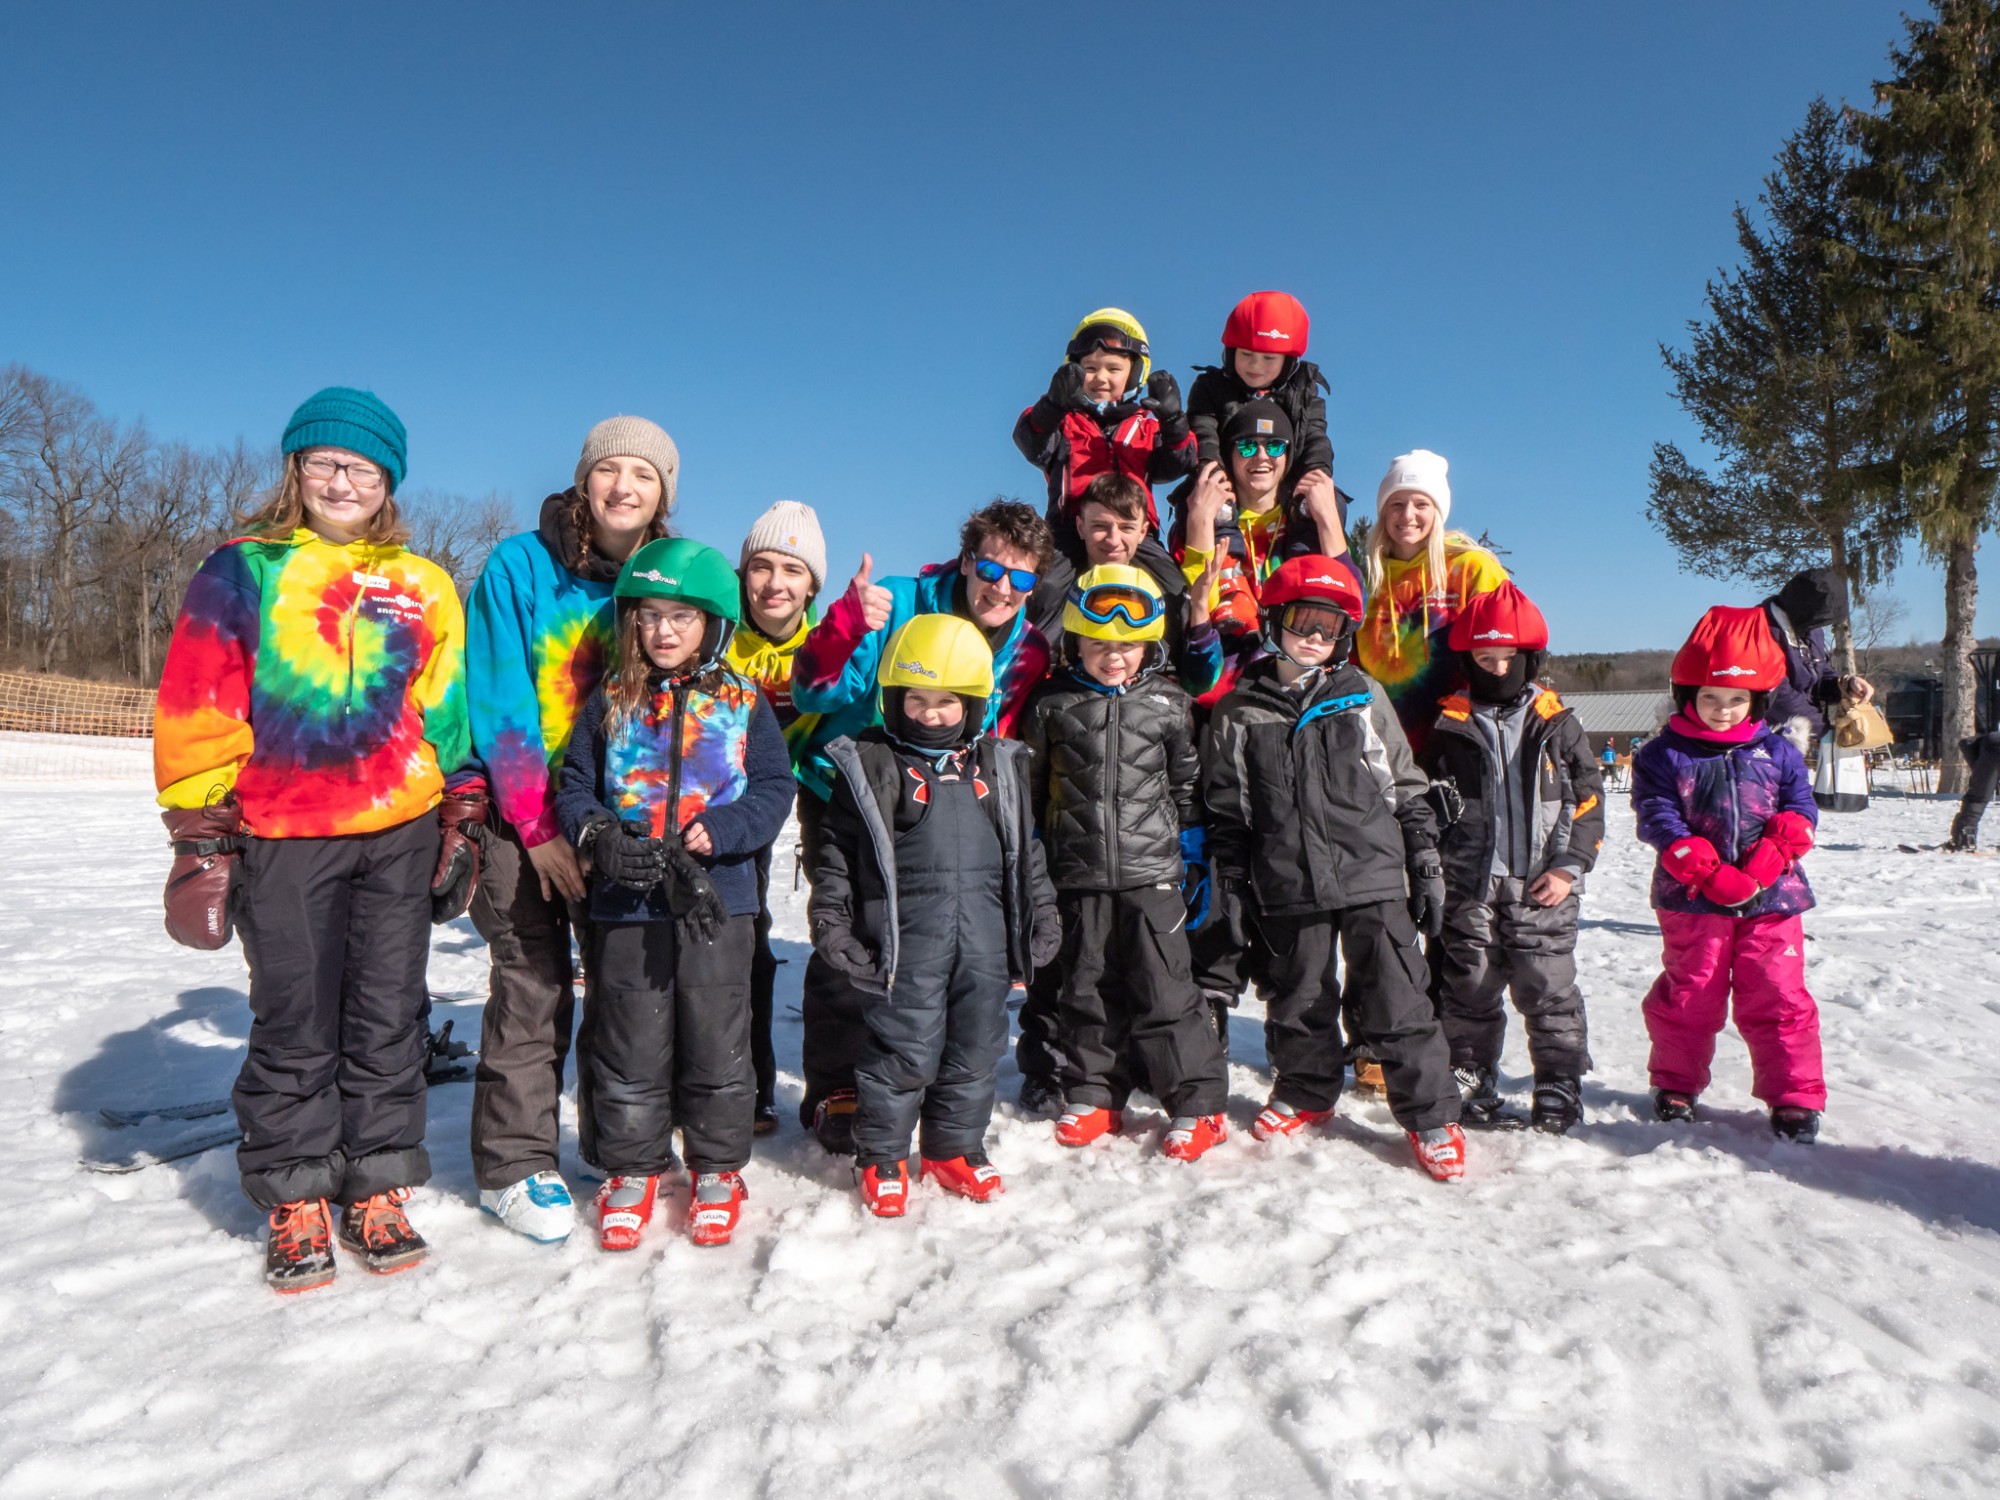 Snow Trails Children's Polar Programs is kid friendly fun on snow